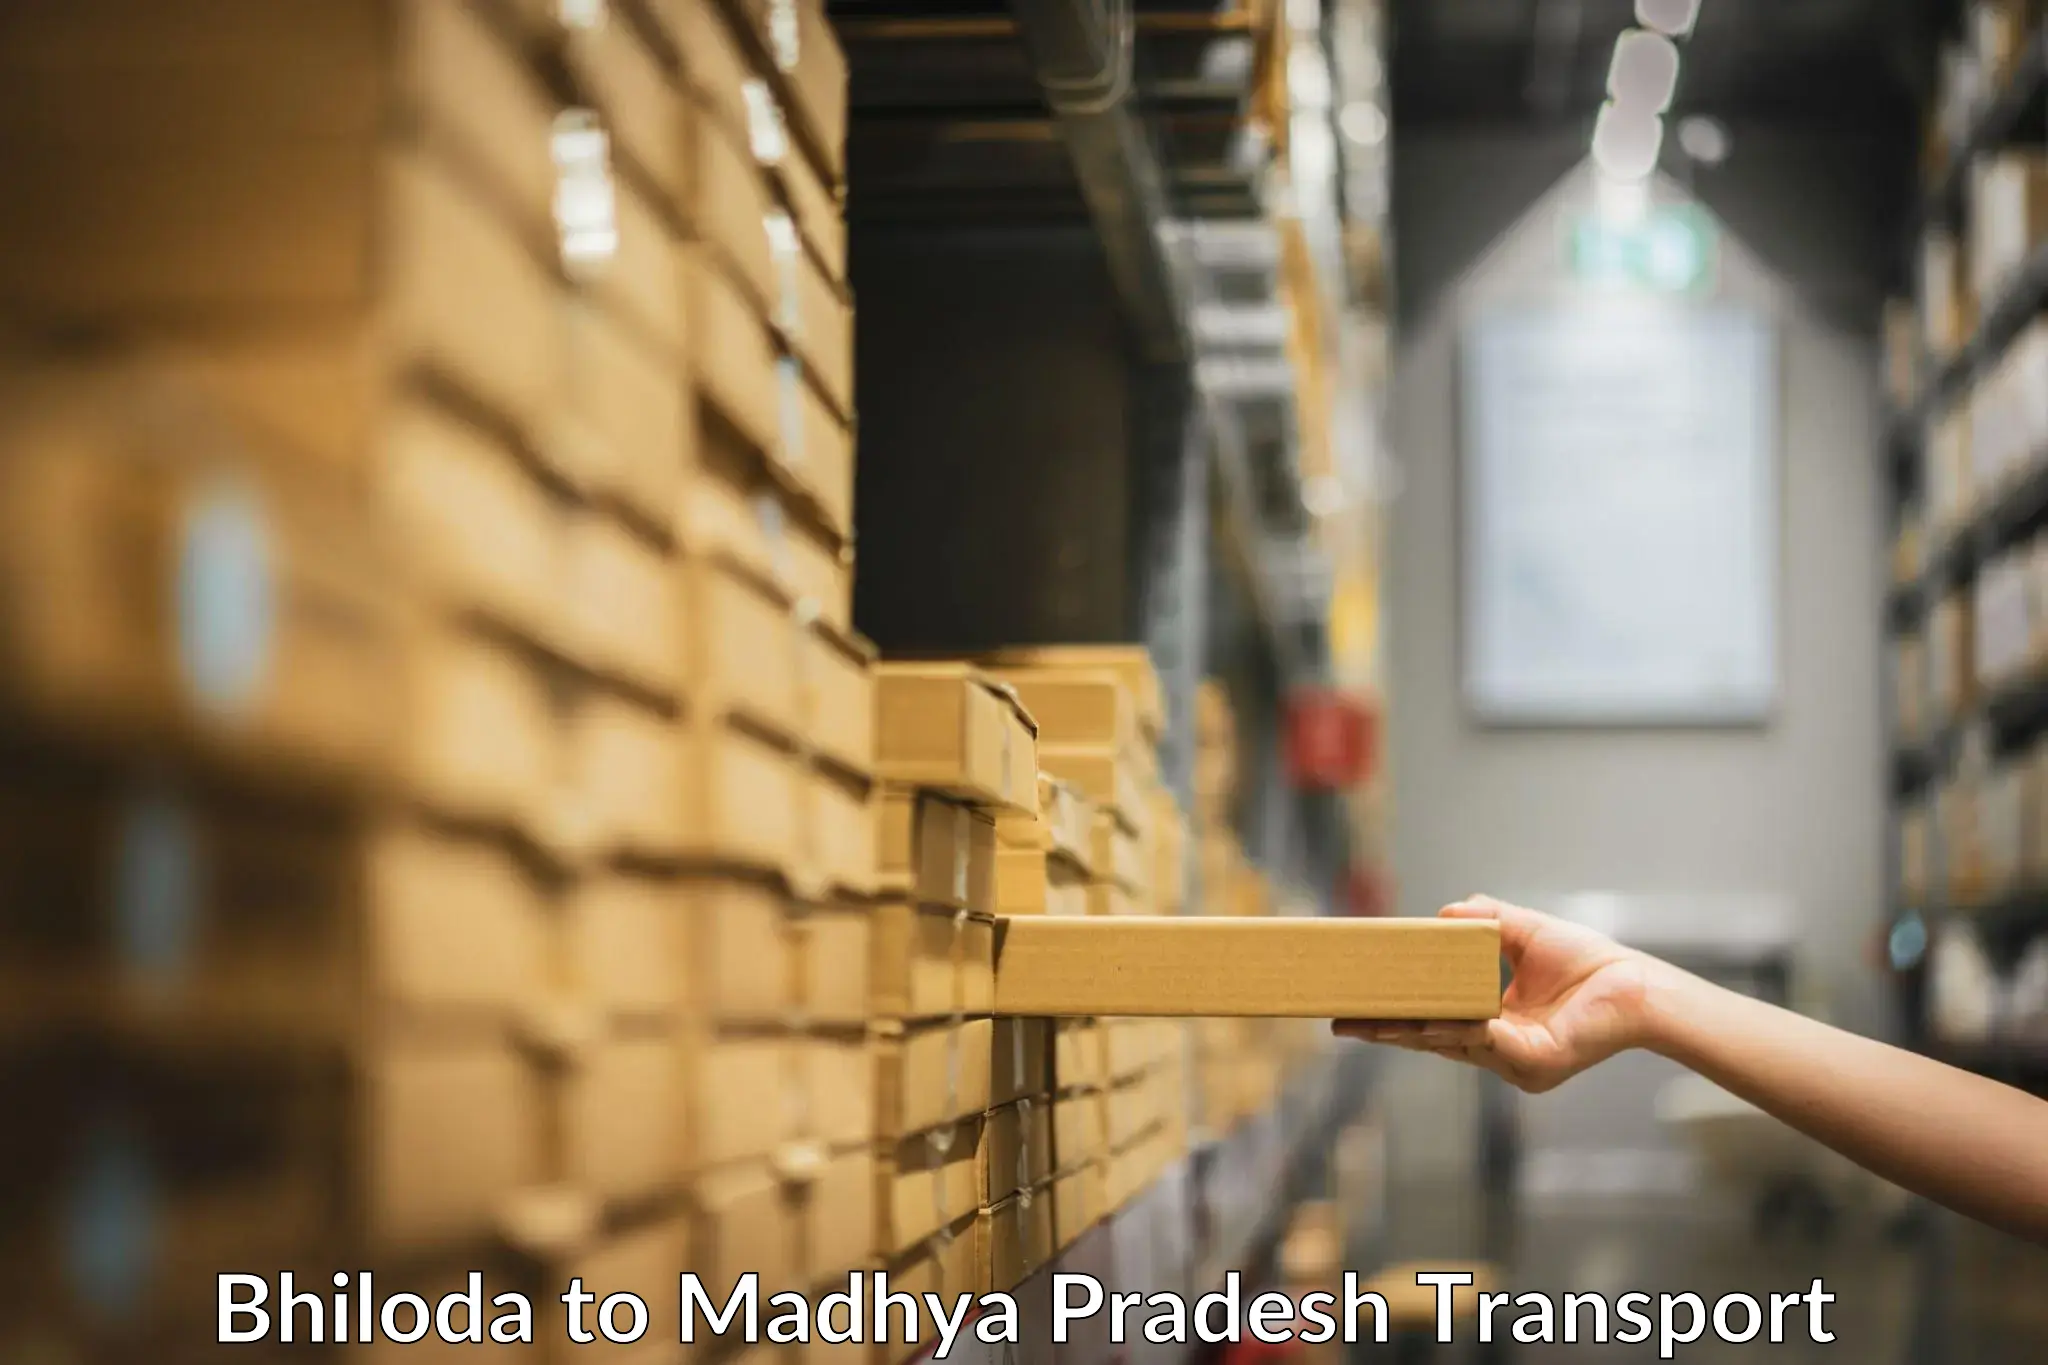 Delivery service Bhiloda to Morena